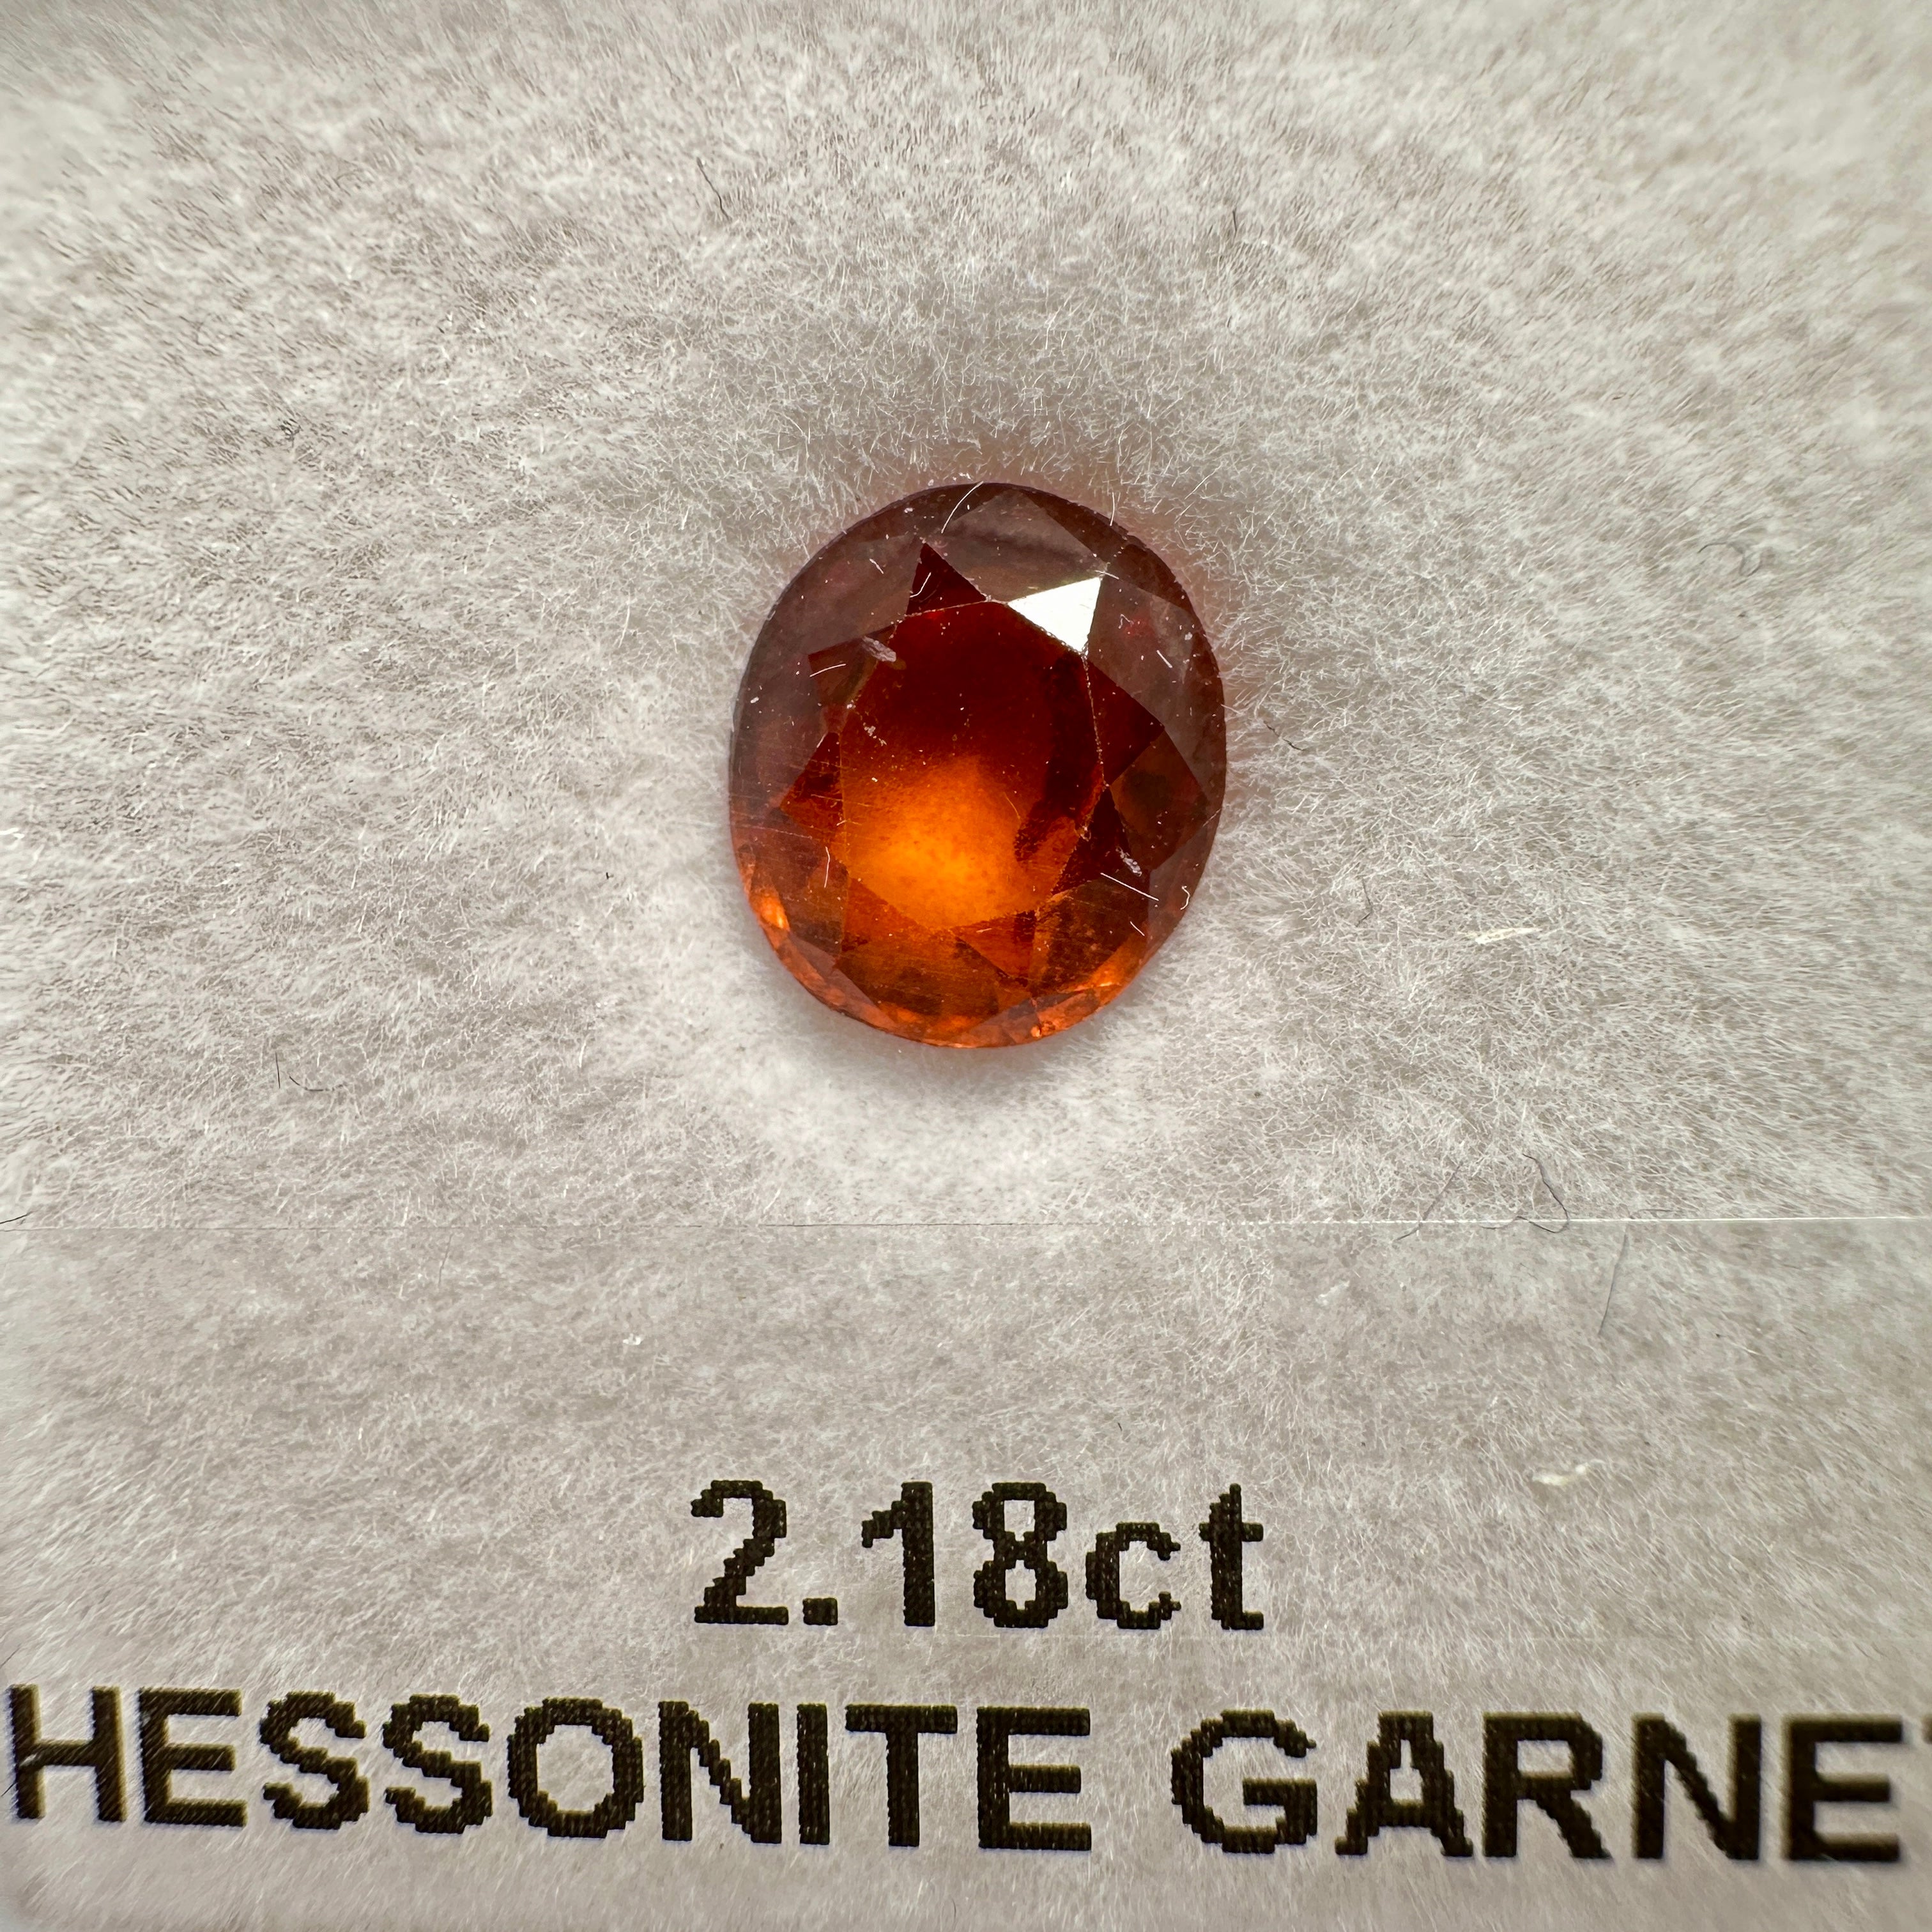 2.18ct Hessonite Garnet, Untreated Unheated, native cut